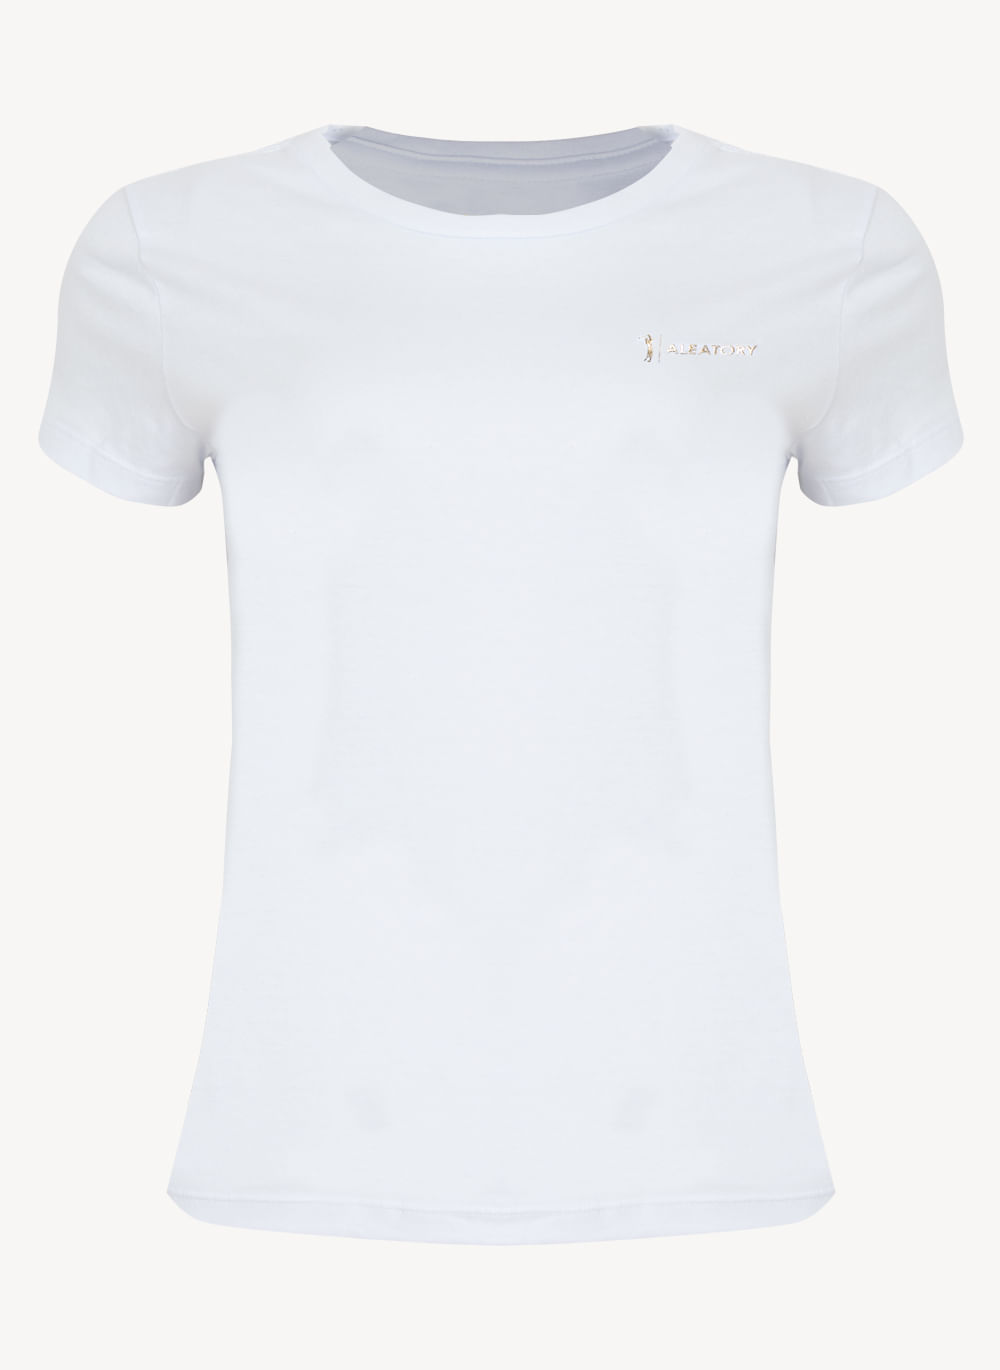 Camiseta-Aleatory-Lisa-Feminina-Golden-Golf-Branca-Branco-P